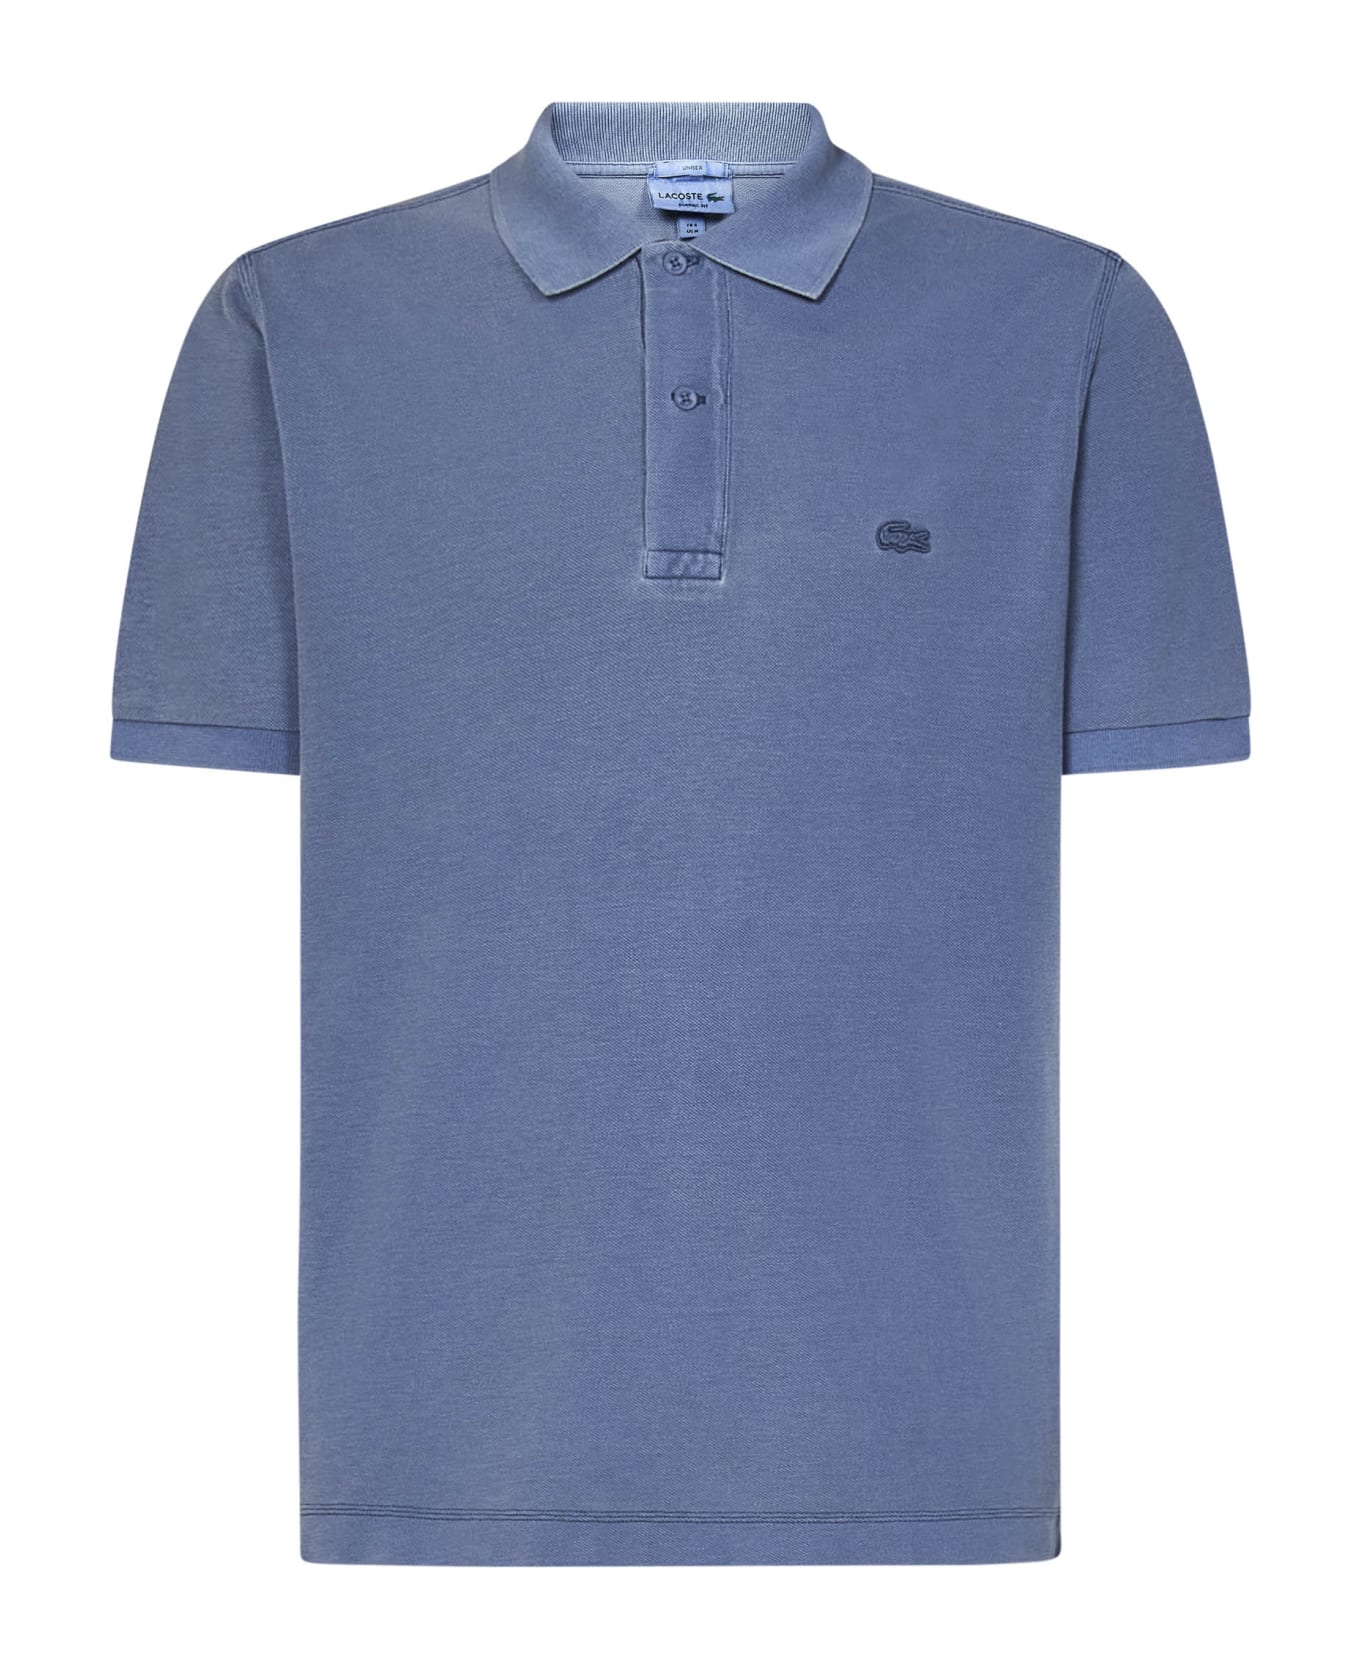 Lacoste Polo Shirt - Light blue